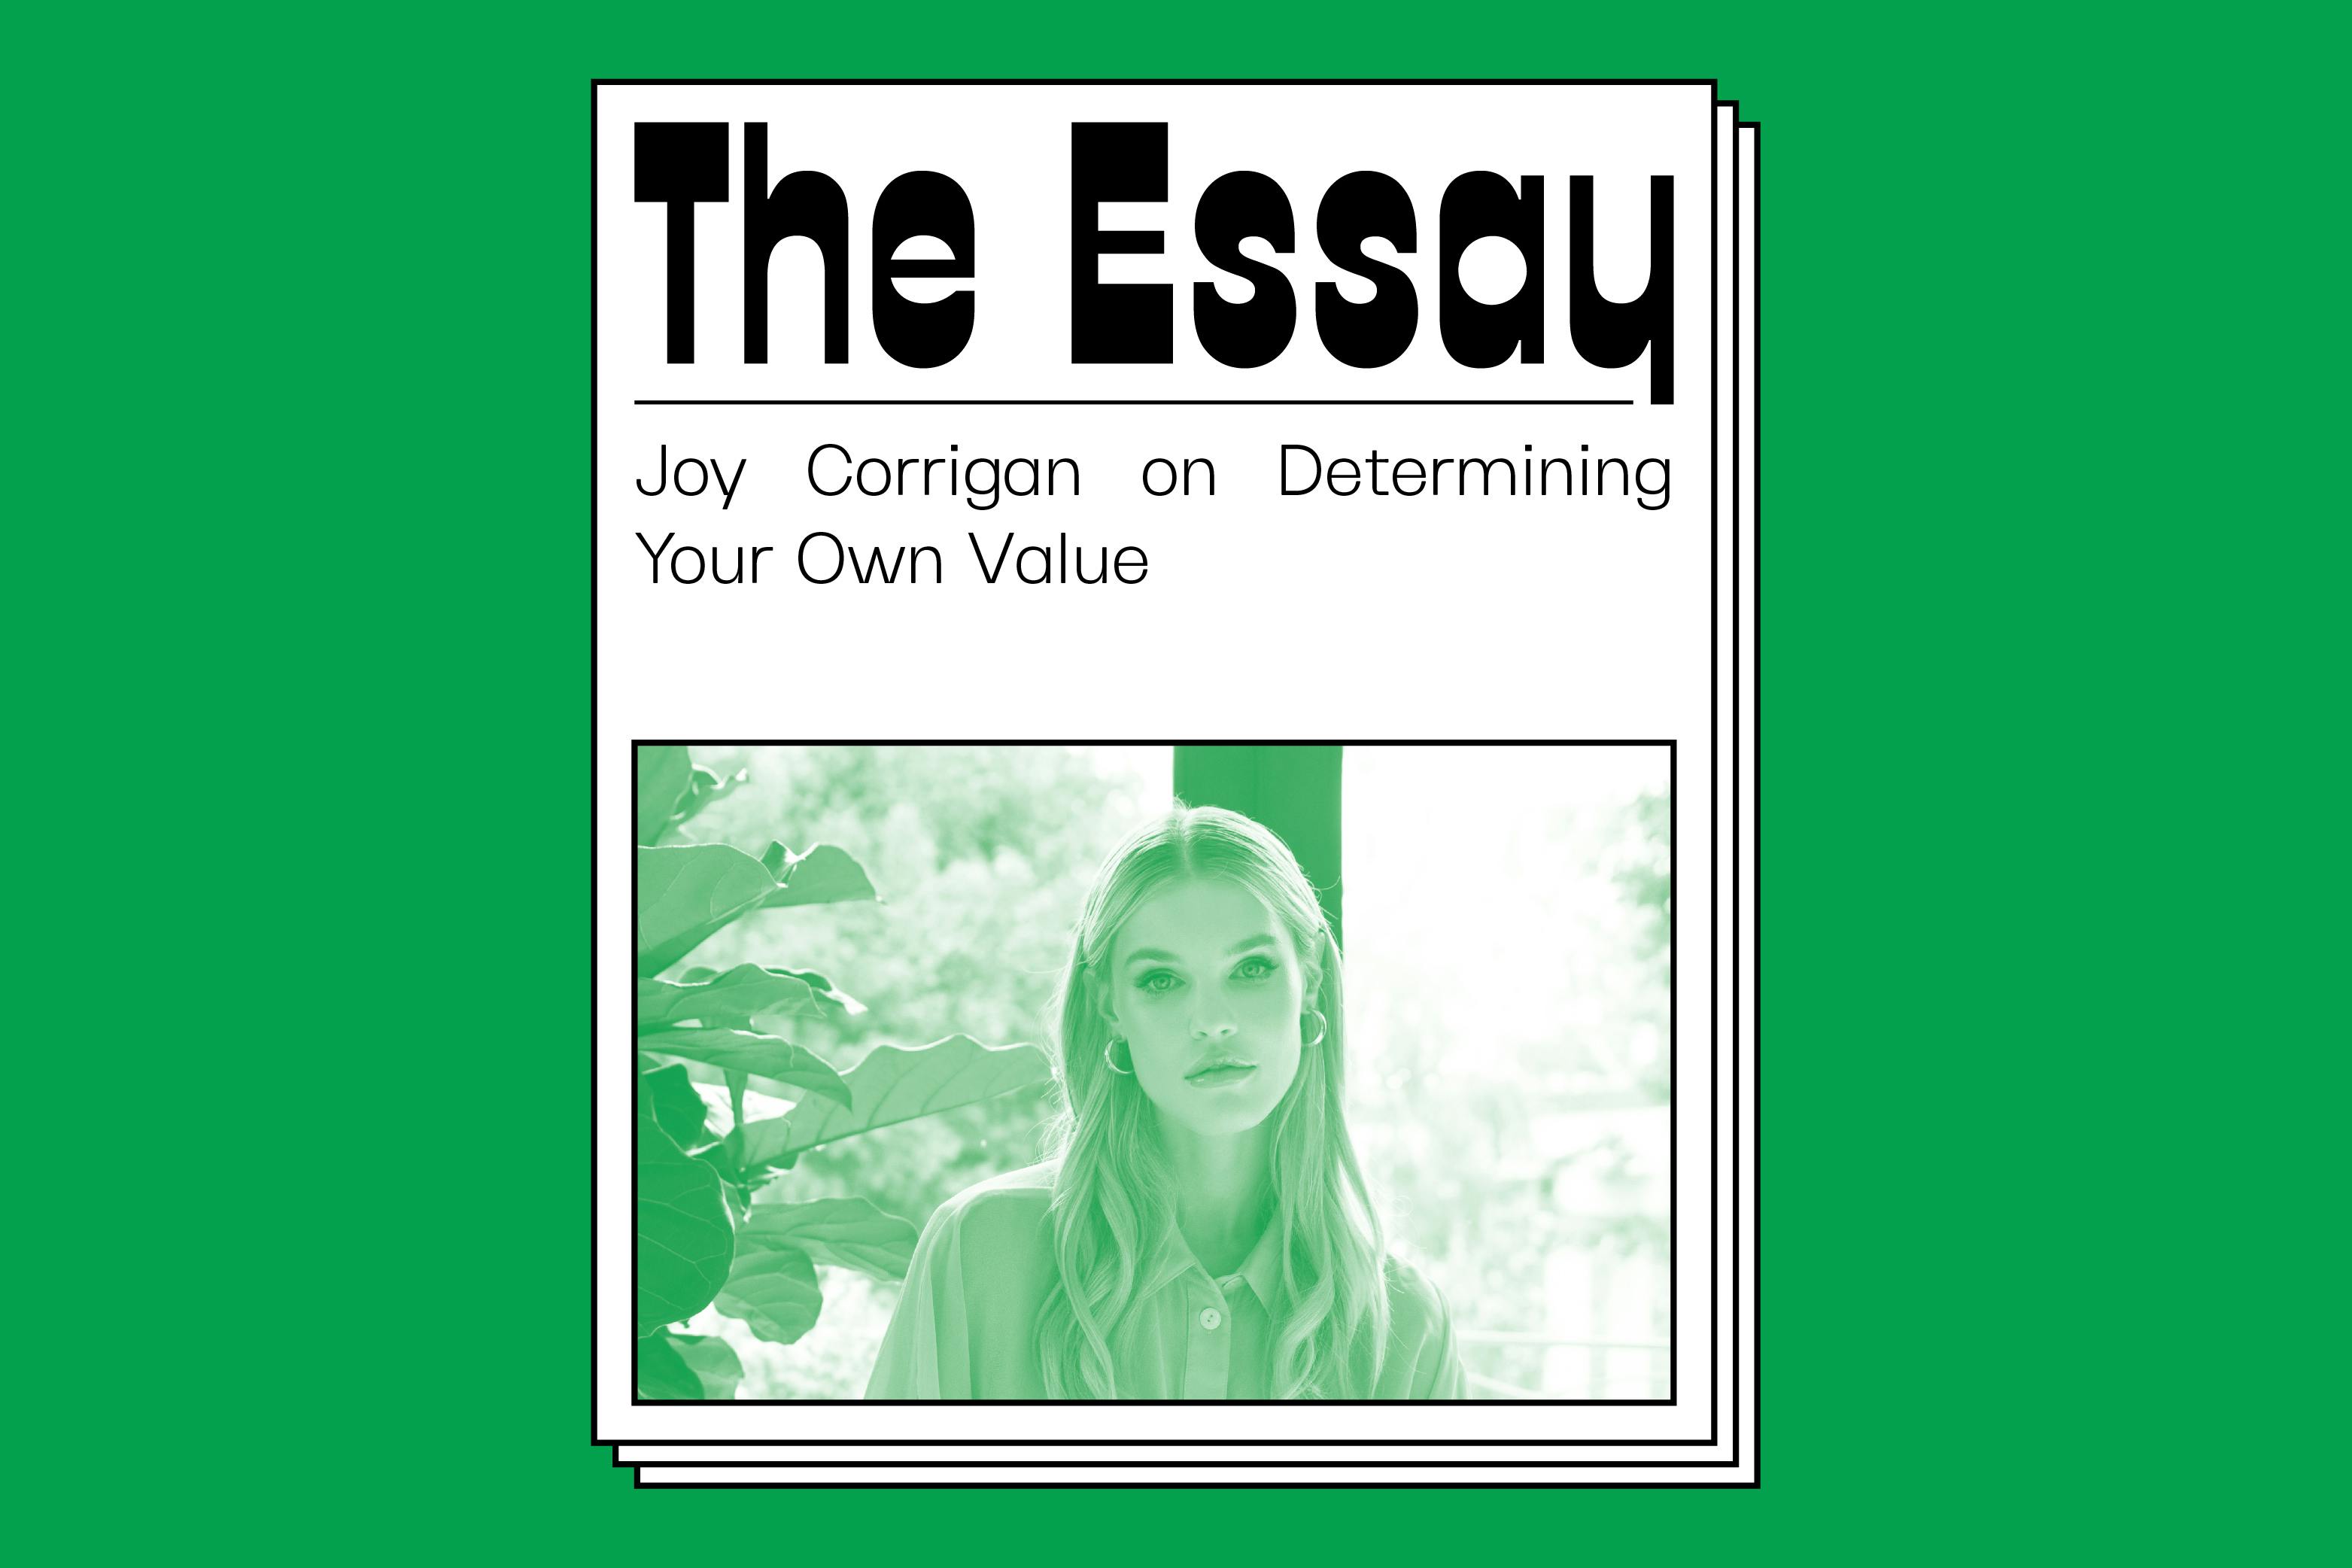 The Essay: Joy Corrigan on Determining Your Own Value